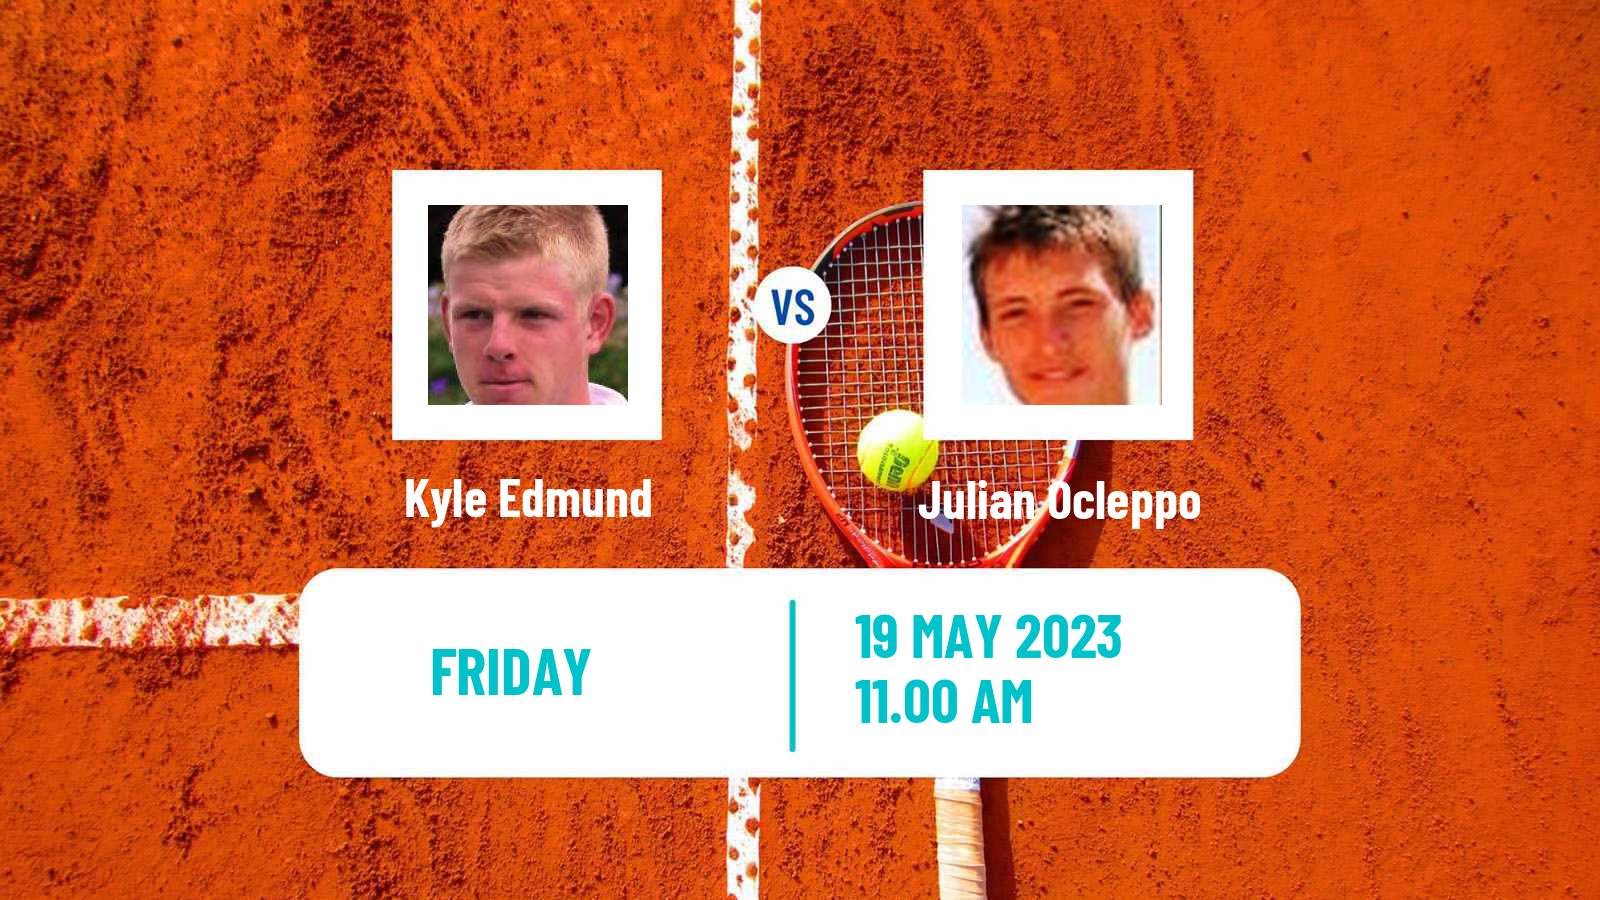 Tennis ITF M25 Reggio Emilia Men Kyle Edmund - Julian Ocleppo